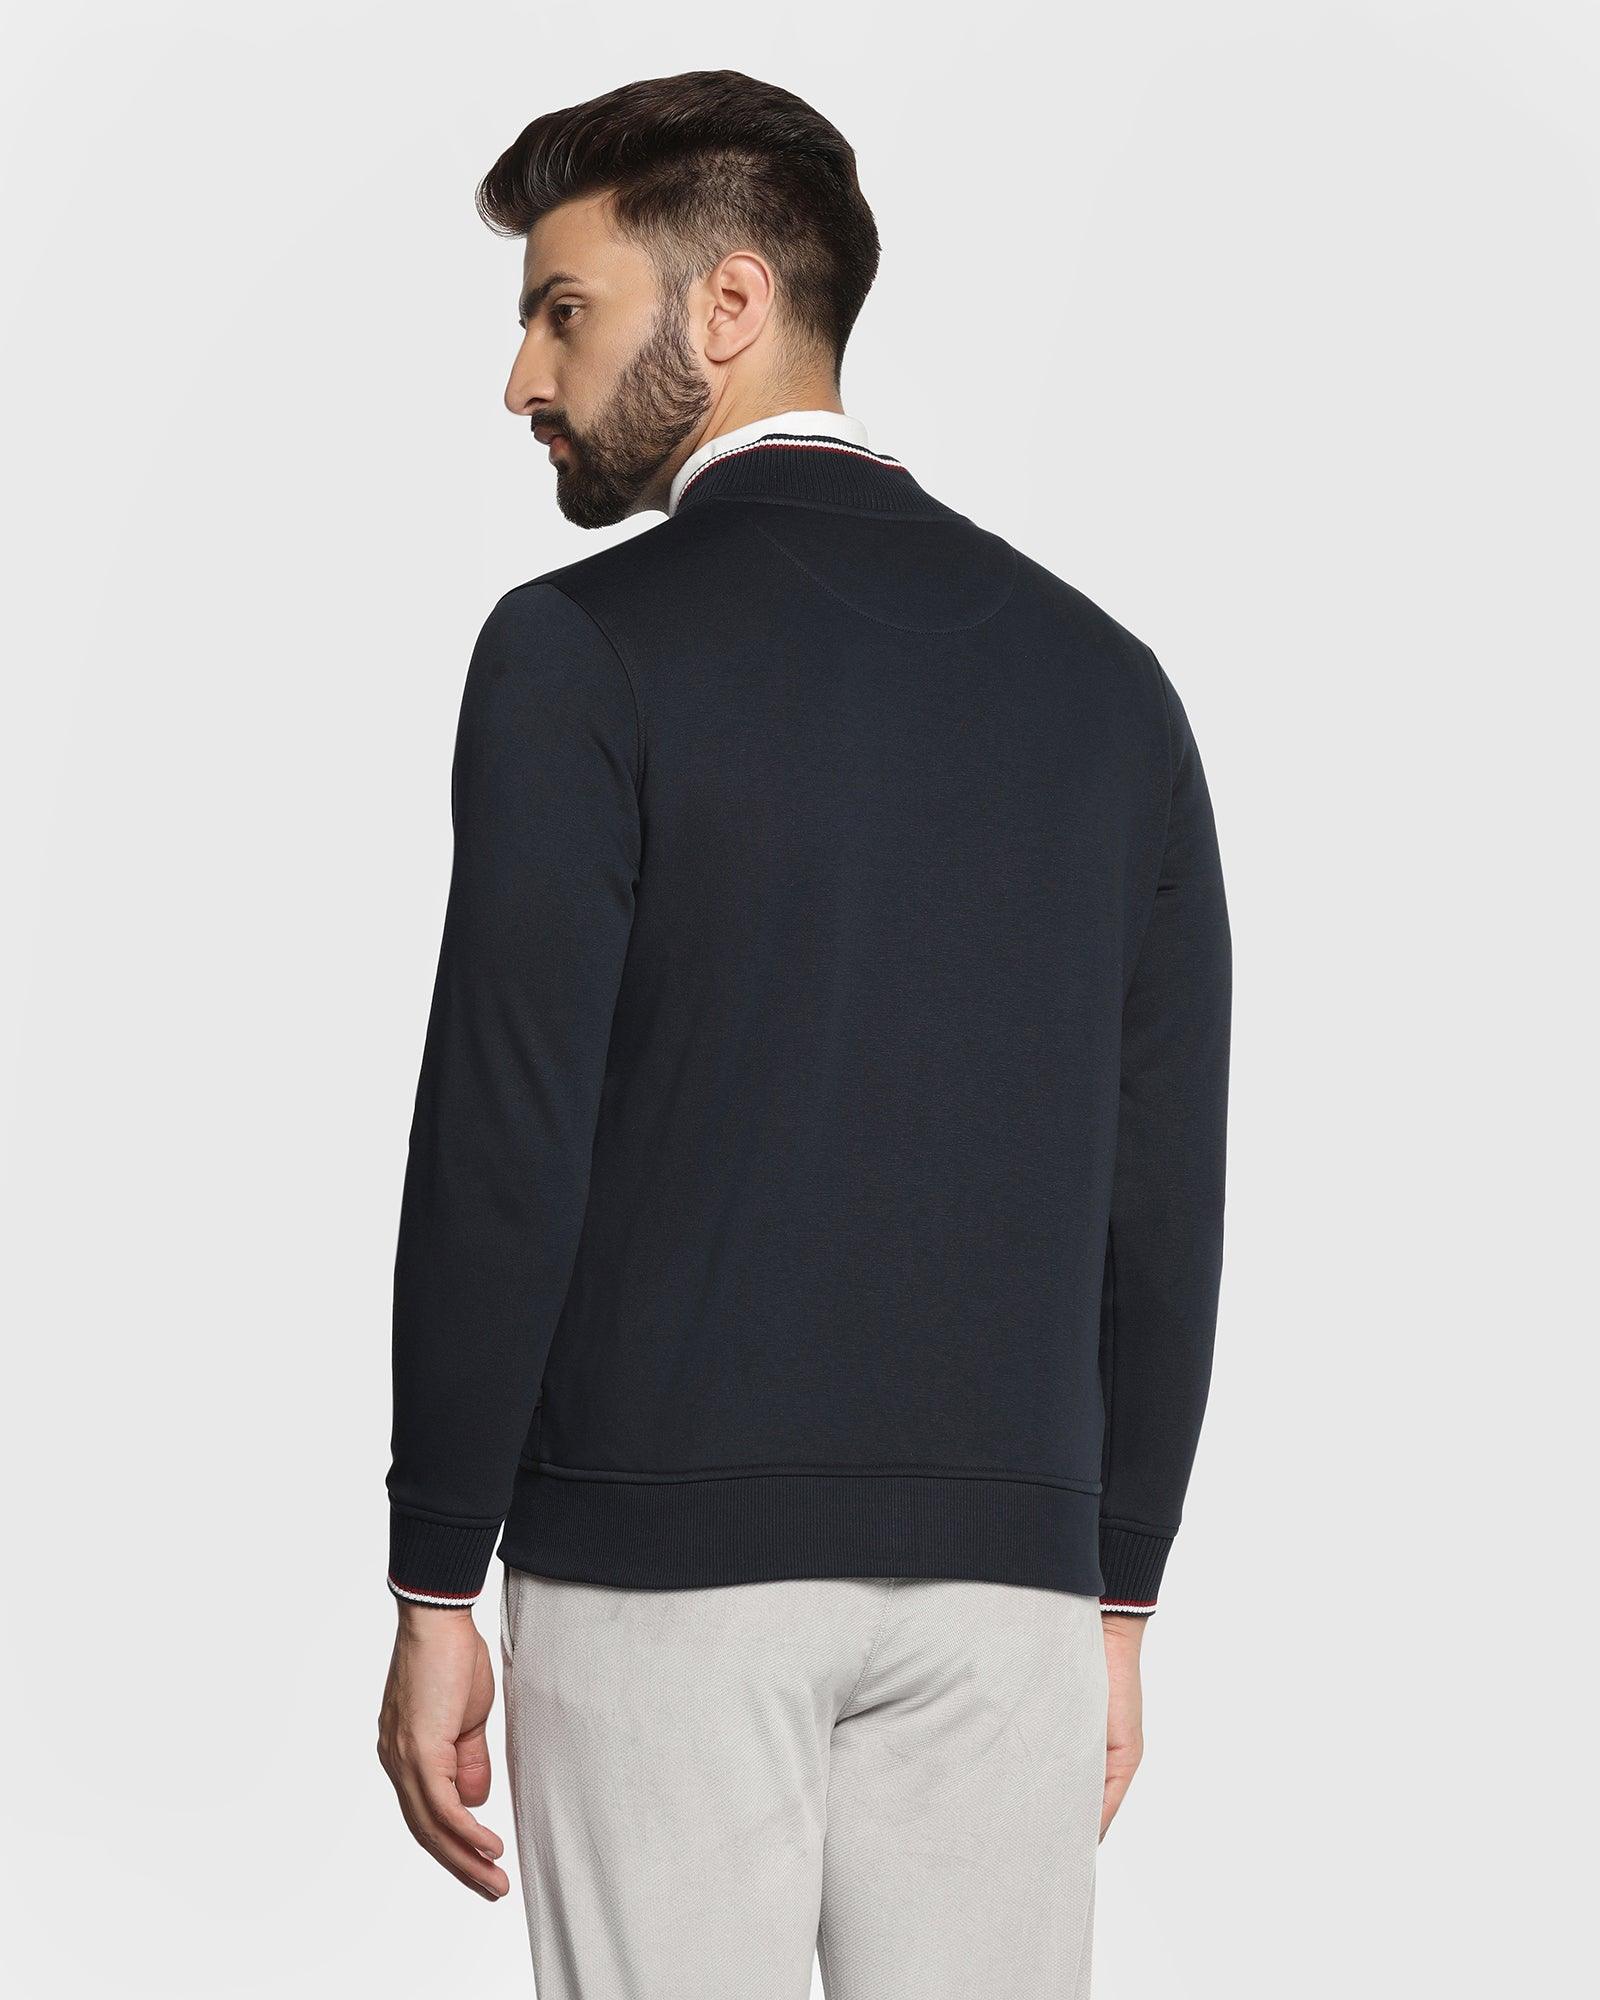 Stylized Collar Navy Solid Sweatshirt - Ryan